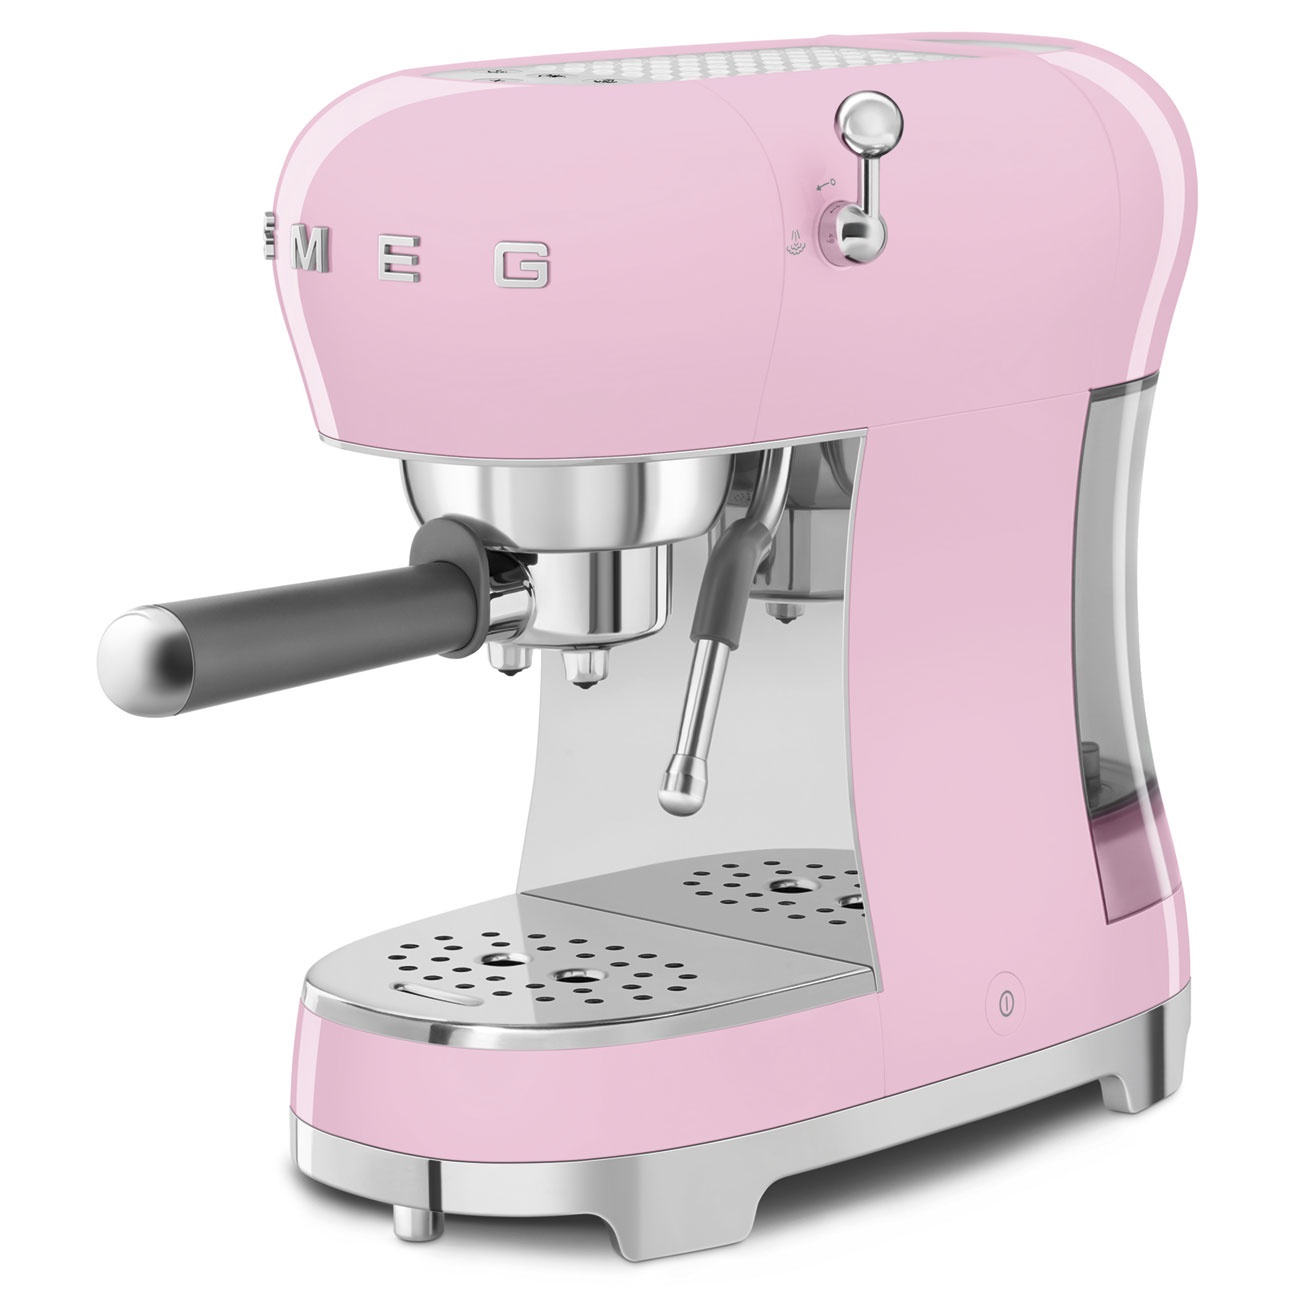 Smeg Pink Espresso Manual Coffee Machine with Steam Wand_4